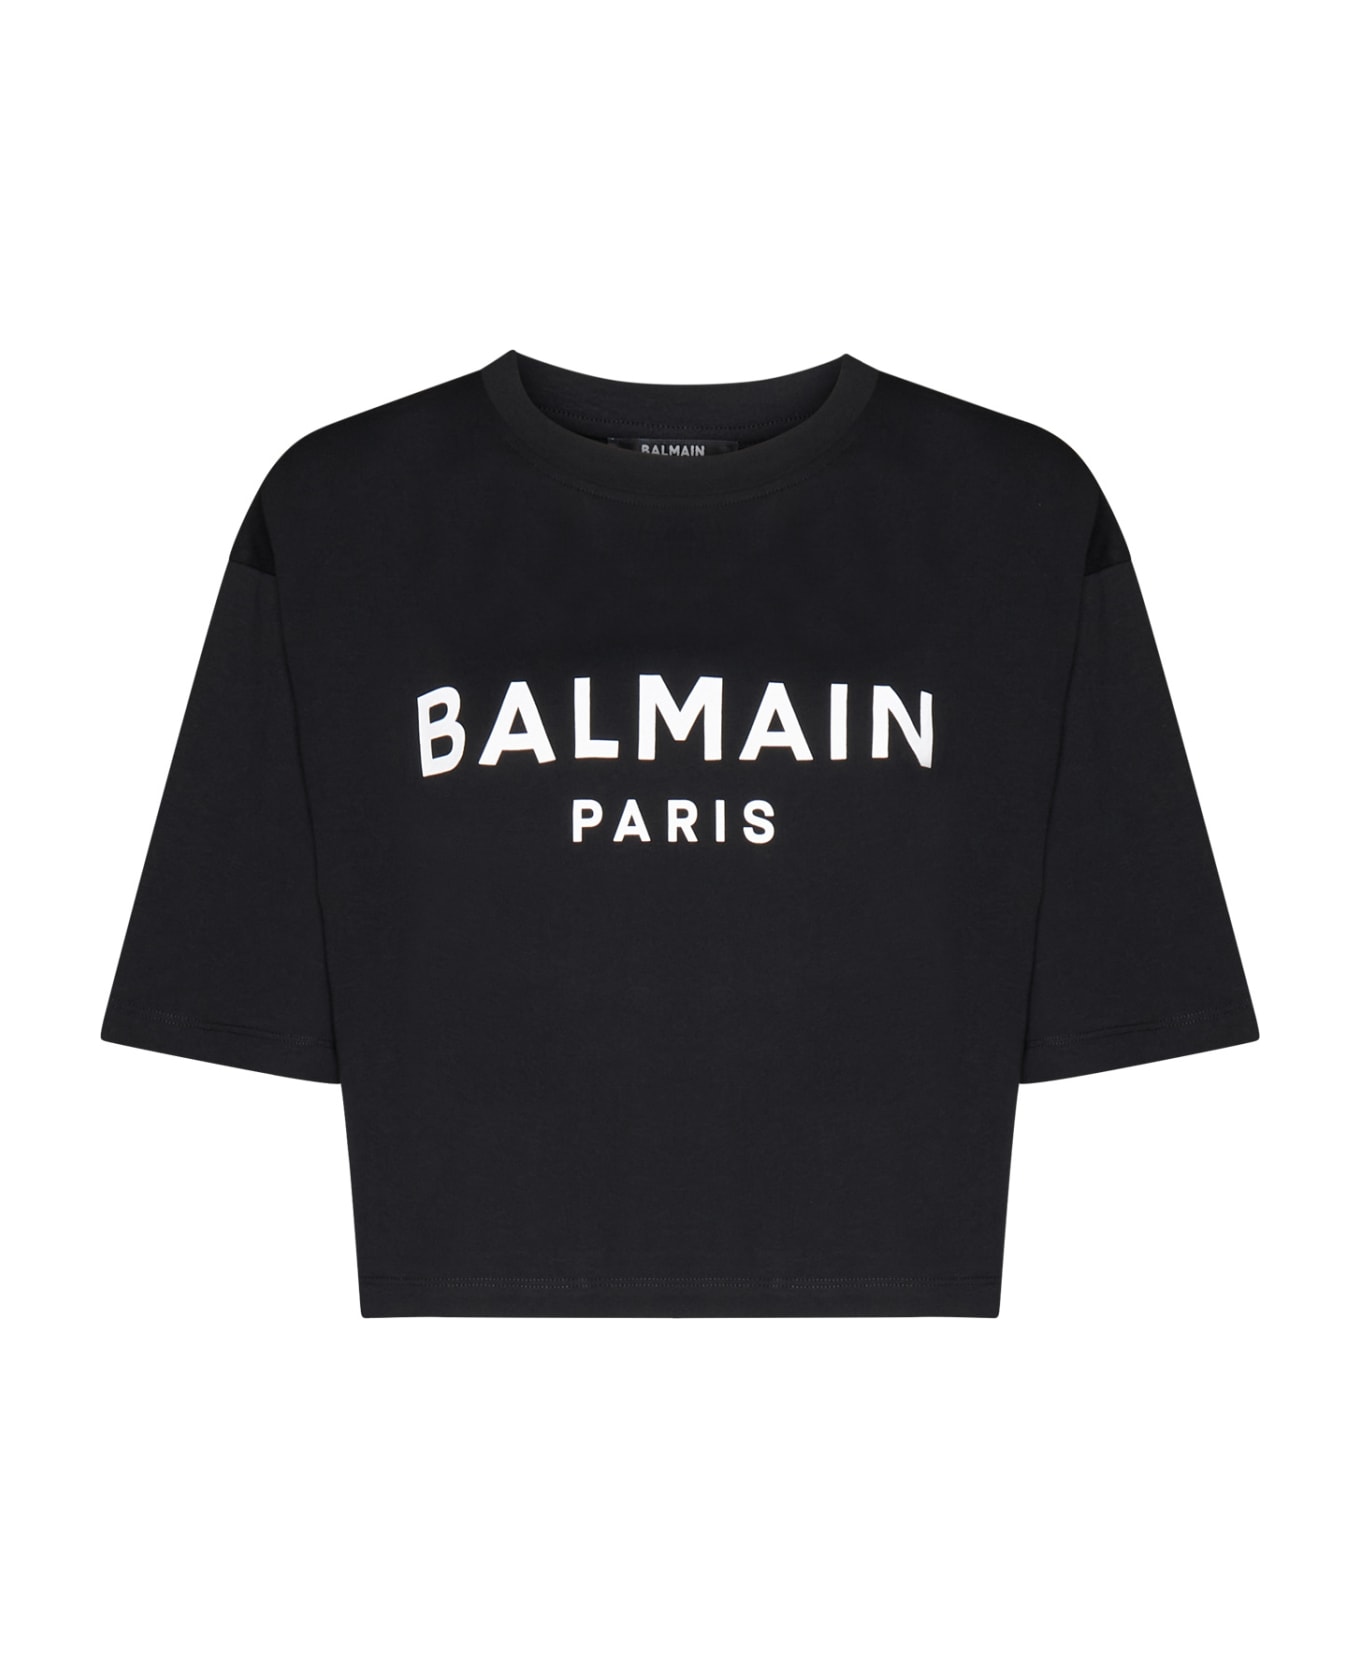 Balmain T-Shirt - Noir/blanc